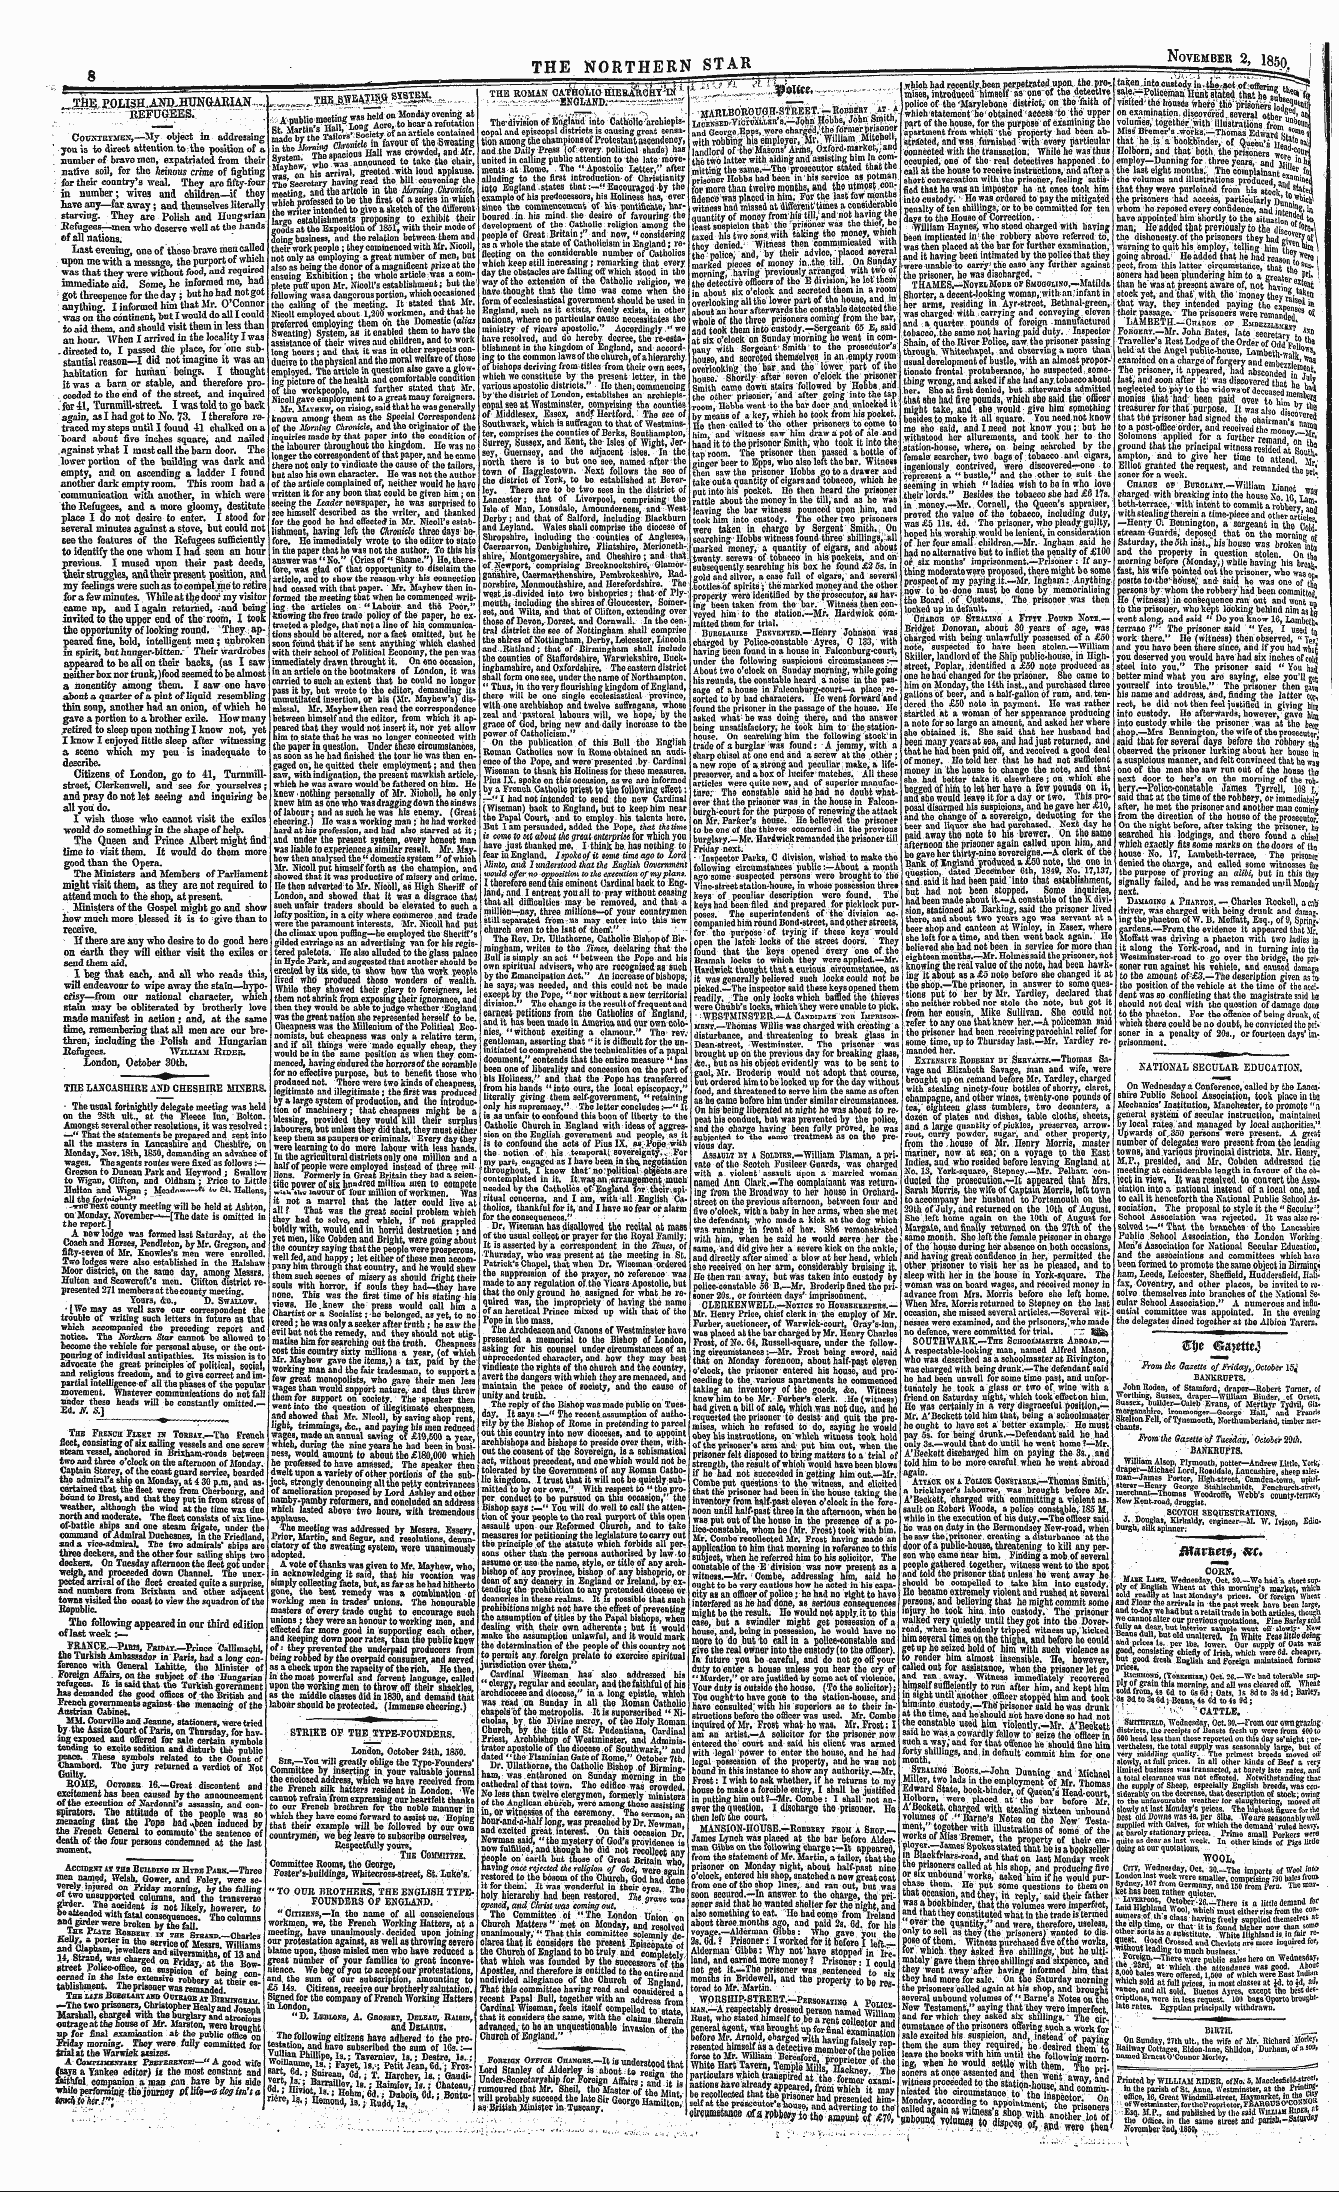 Northern Star (1837-1852): jS F Y, 2nd edition - - V., ,. ,, * 'I .&Gt;T. -J ;